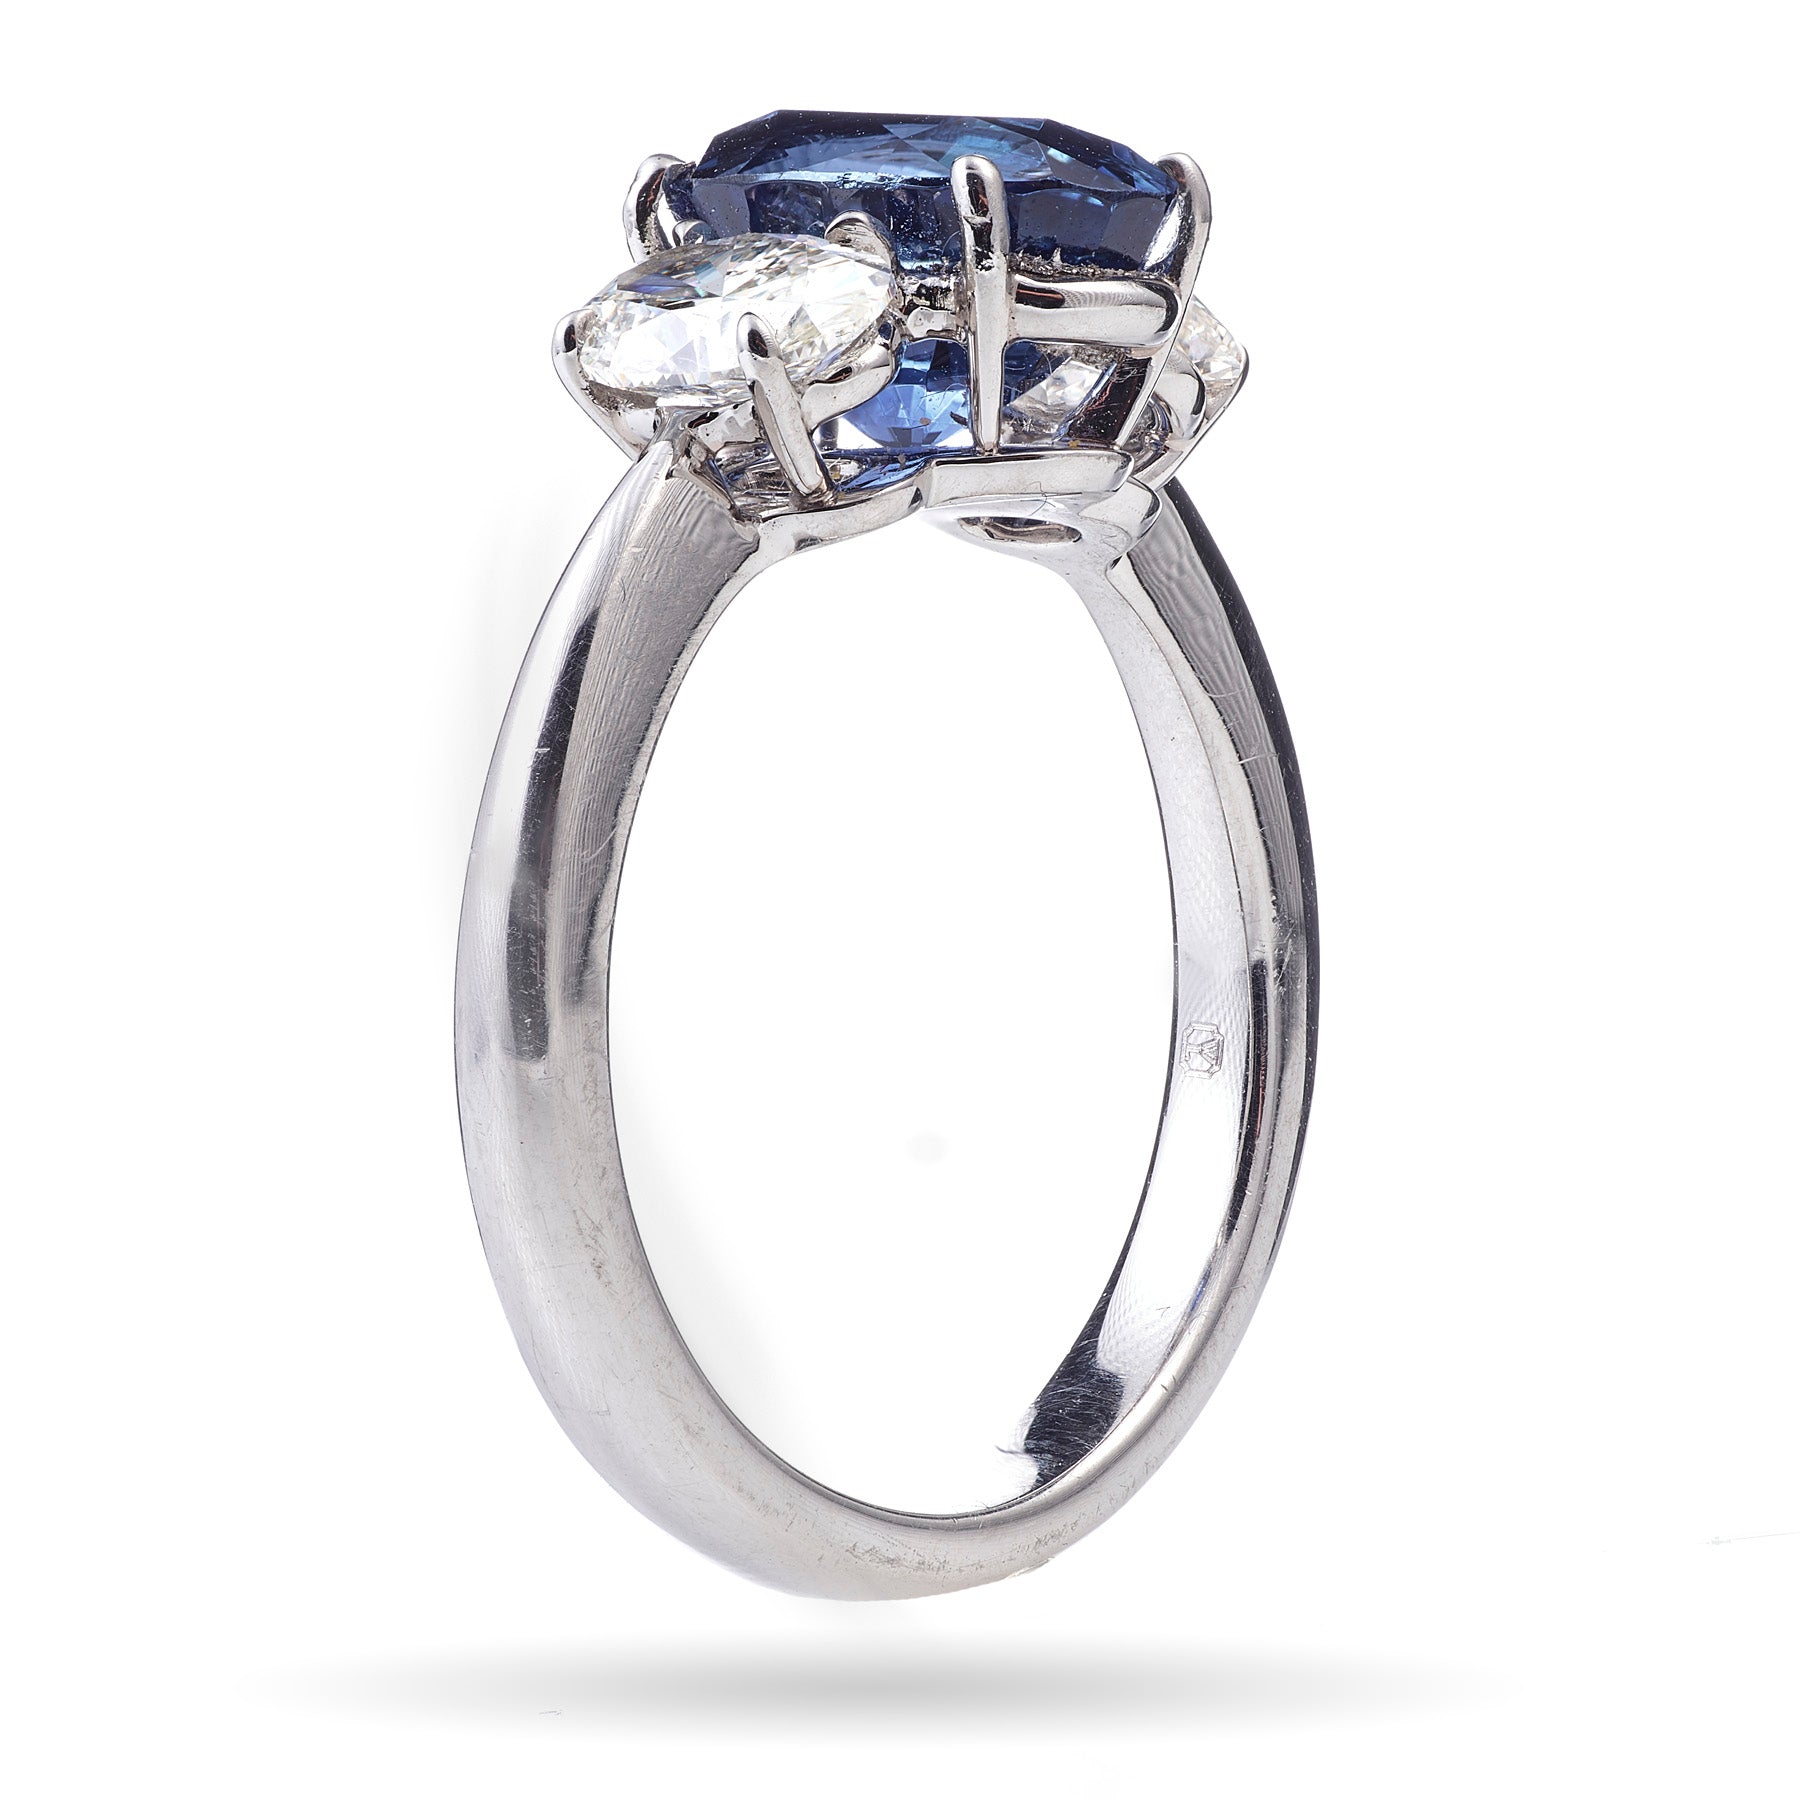 Buy Jewelry Online | Diamond Jewelry Store Seattle - Menashe Jewelers ...